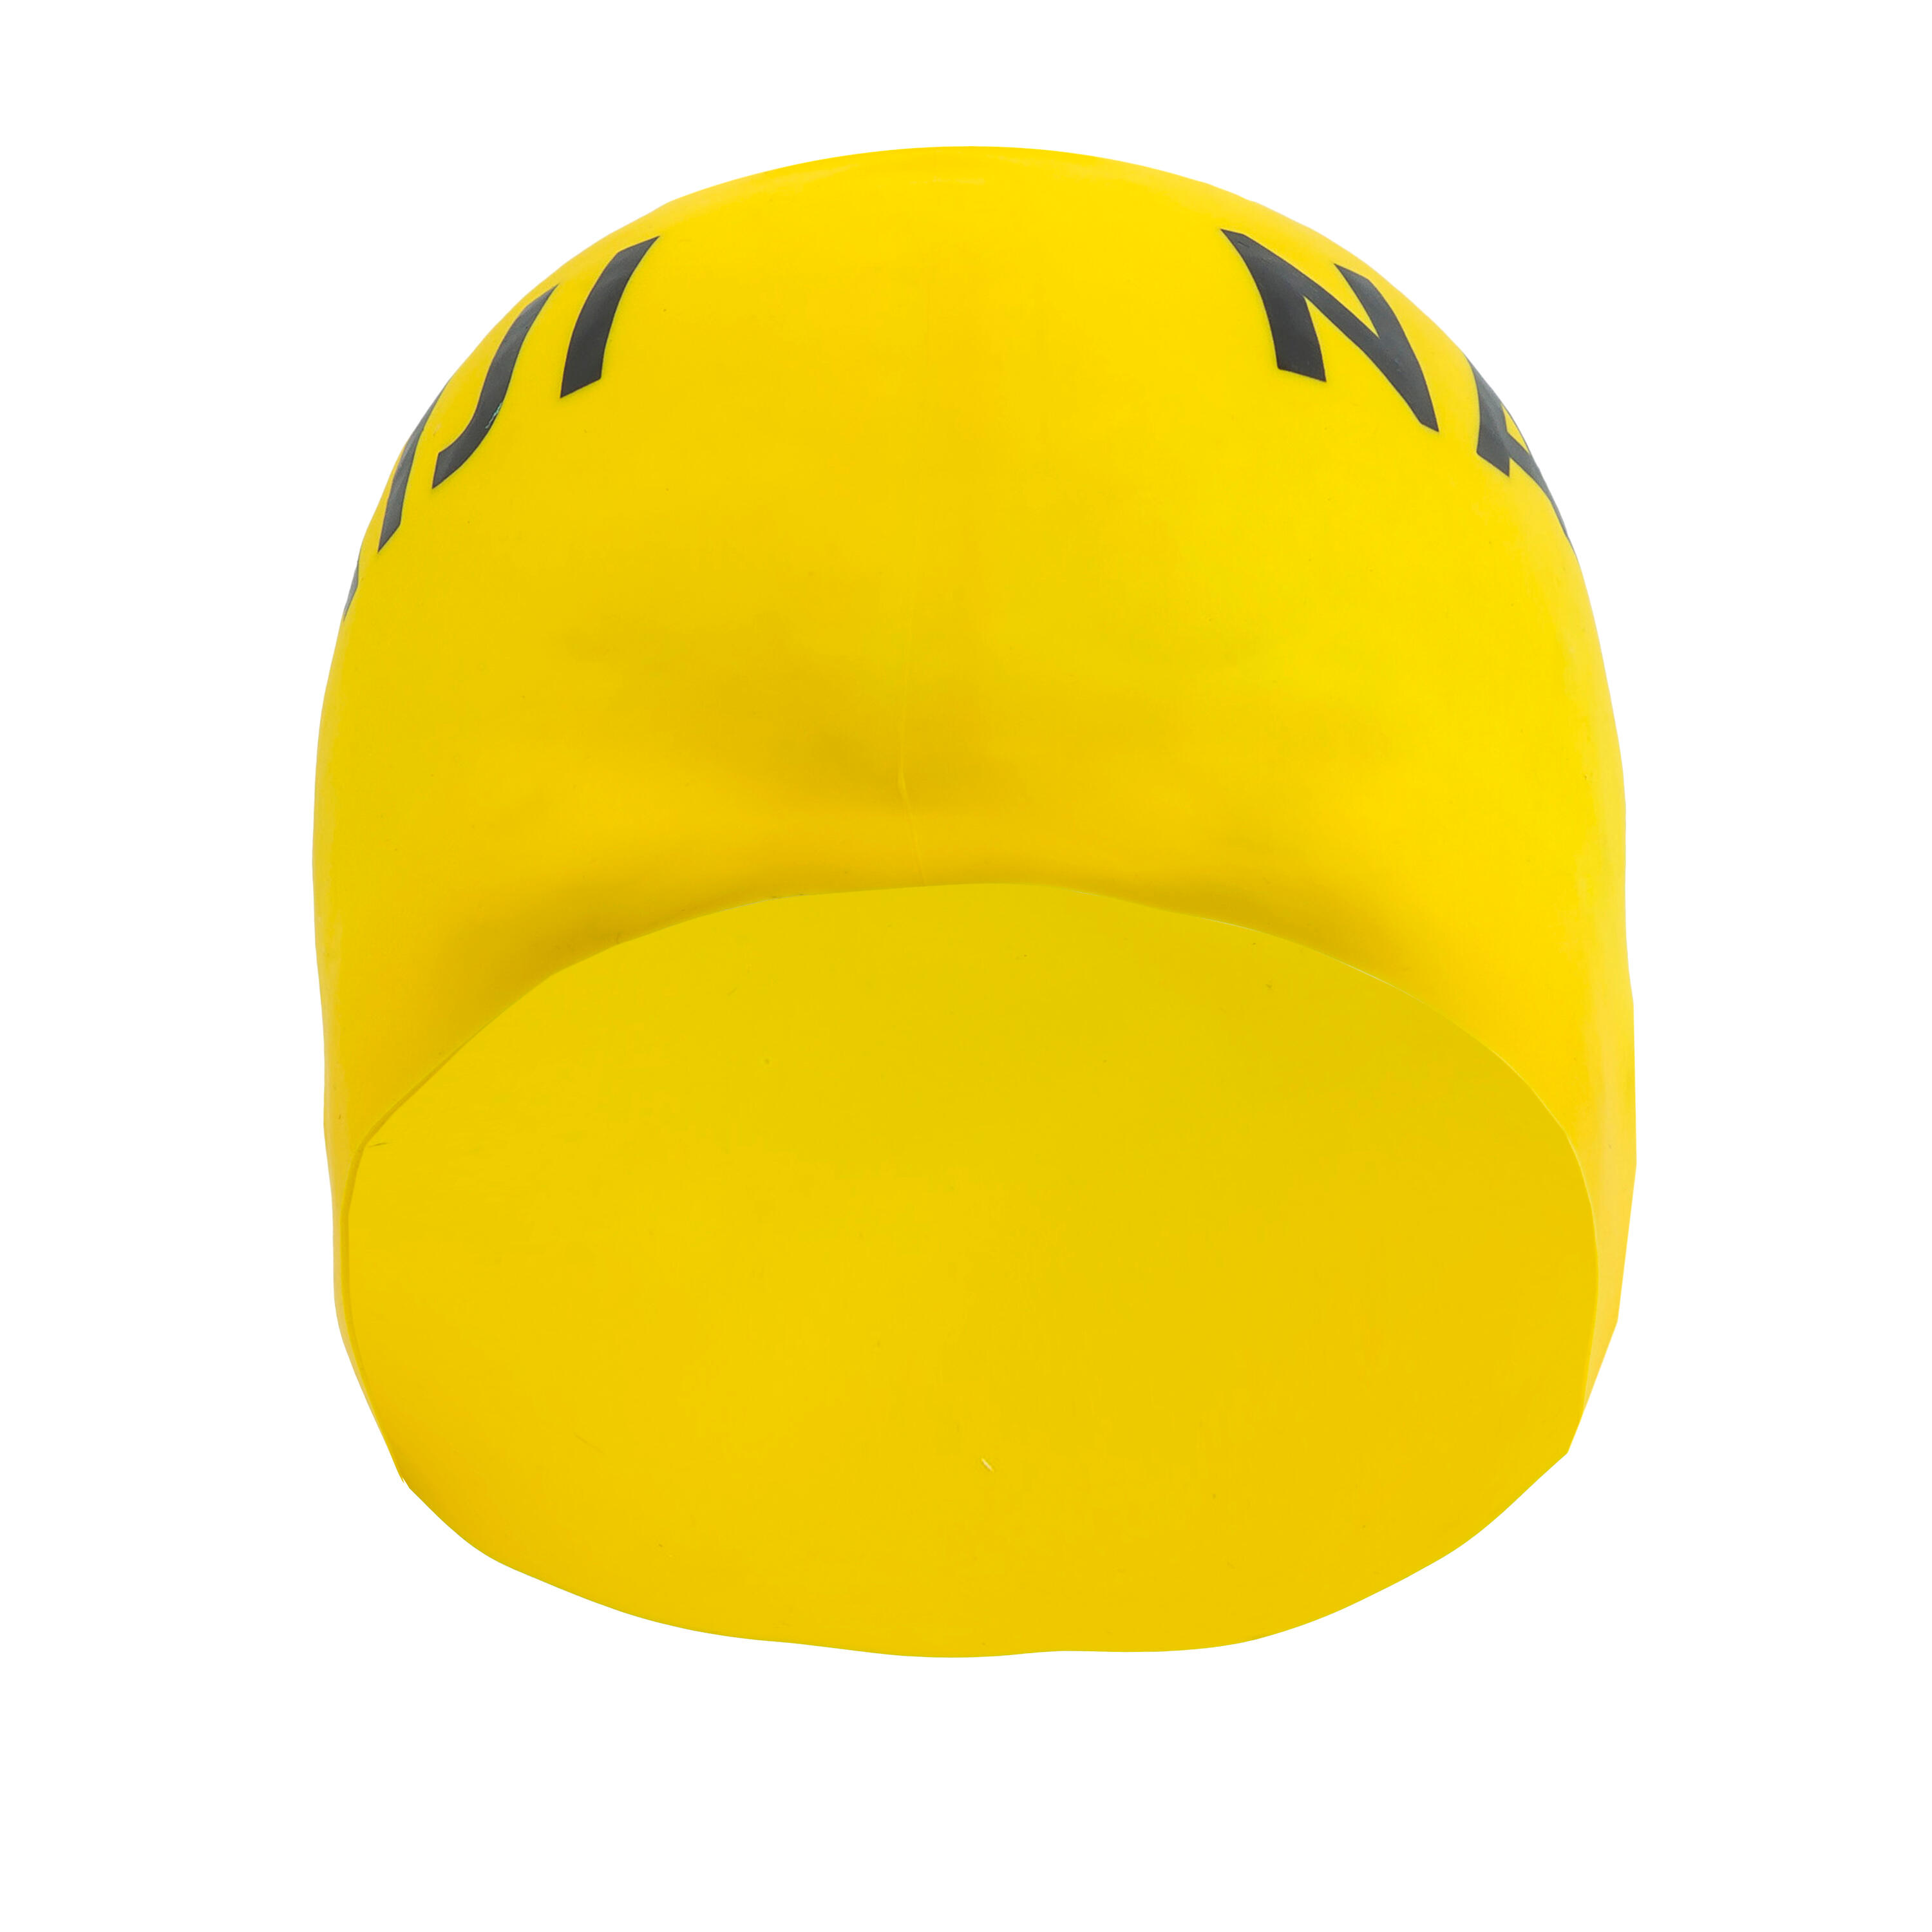 Silicone swim cap - One size - Yellow Black 4/4